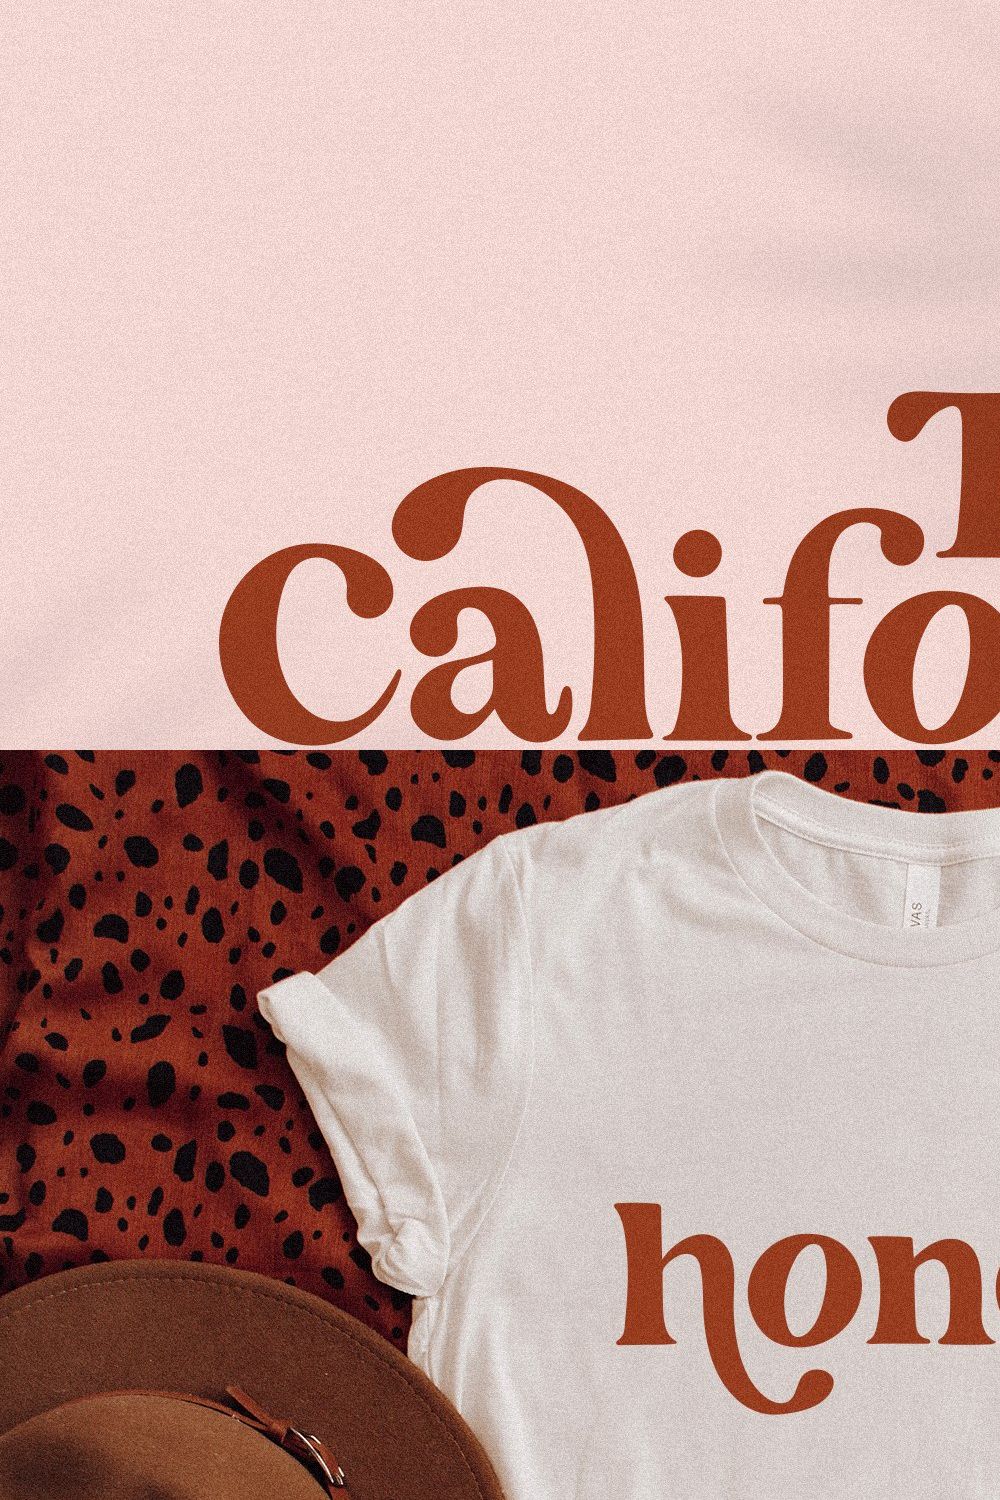 The California | Modern Serif Font pinterest preview image.